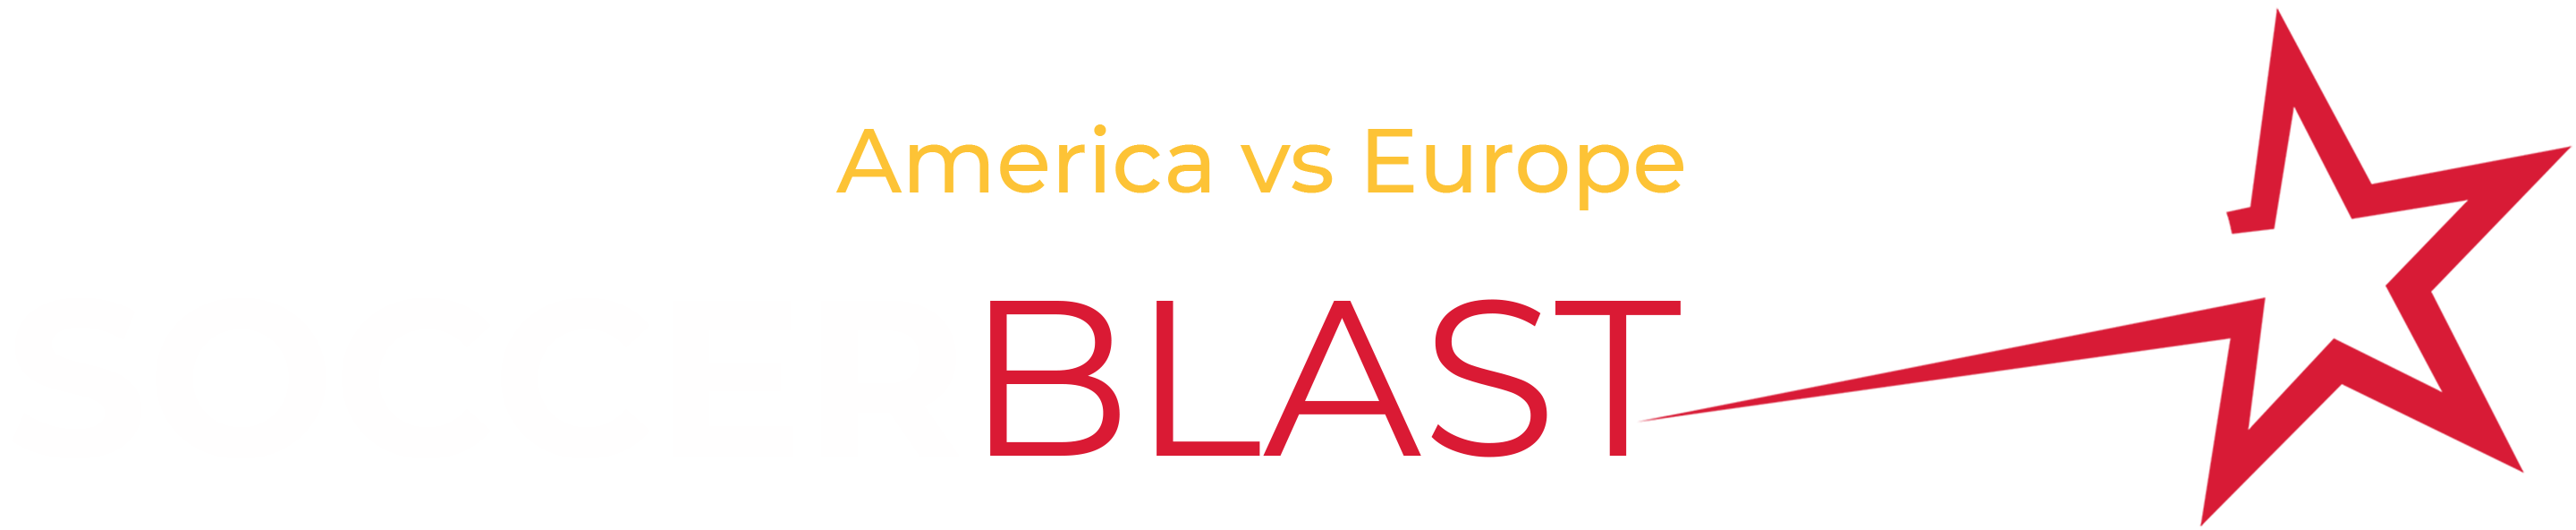 Super Soccer Blast America Vs Europe